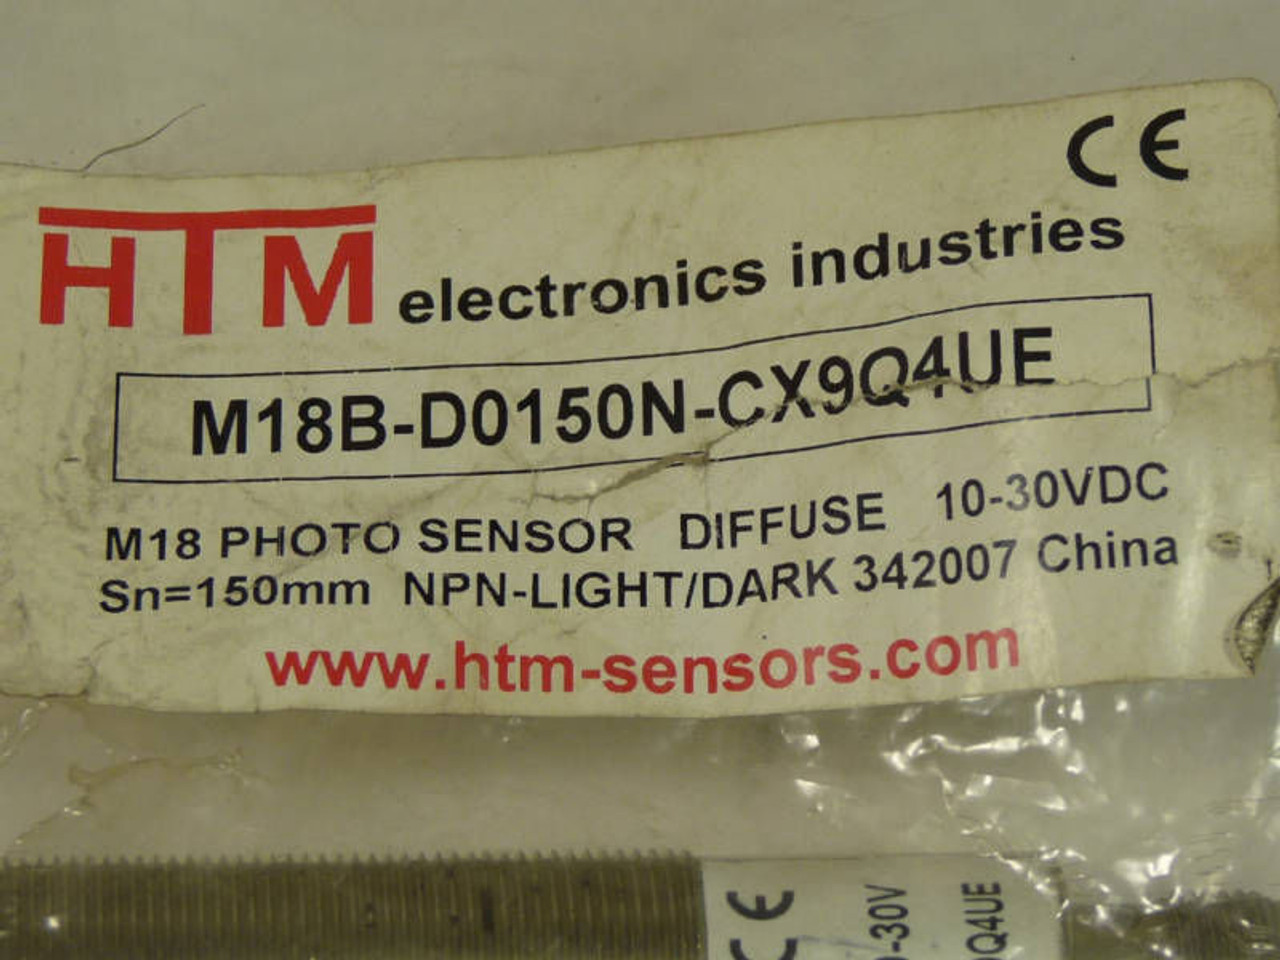 HTM Photosensor Diffuse 10-30VDC M18B-D0150N-CX9Q4UE !